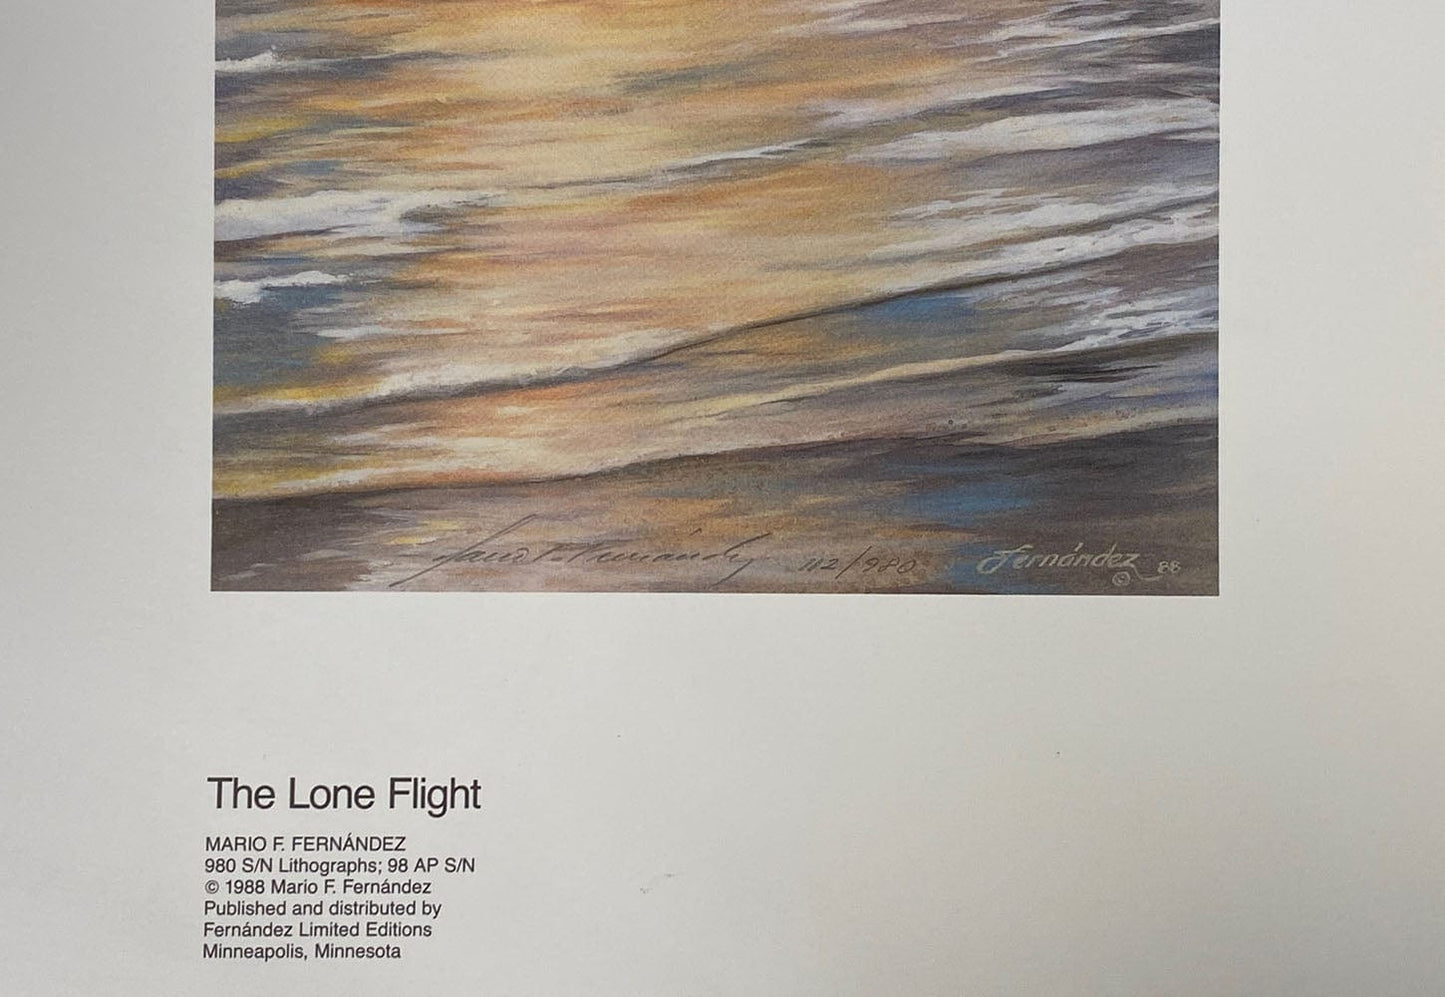 Mario F Fernandez; "The Lone Flight"